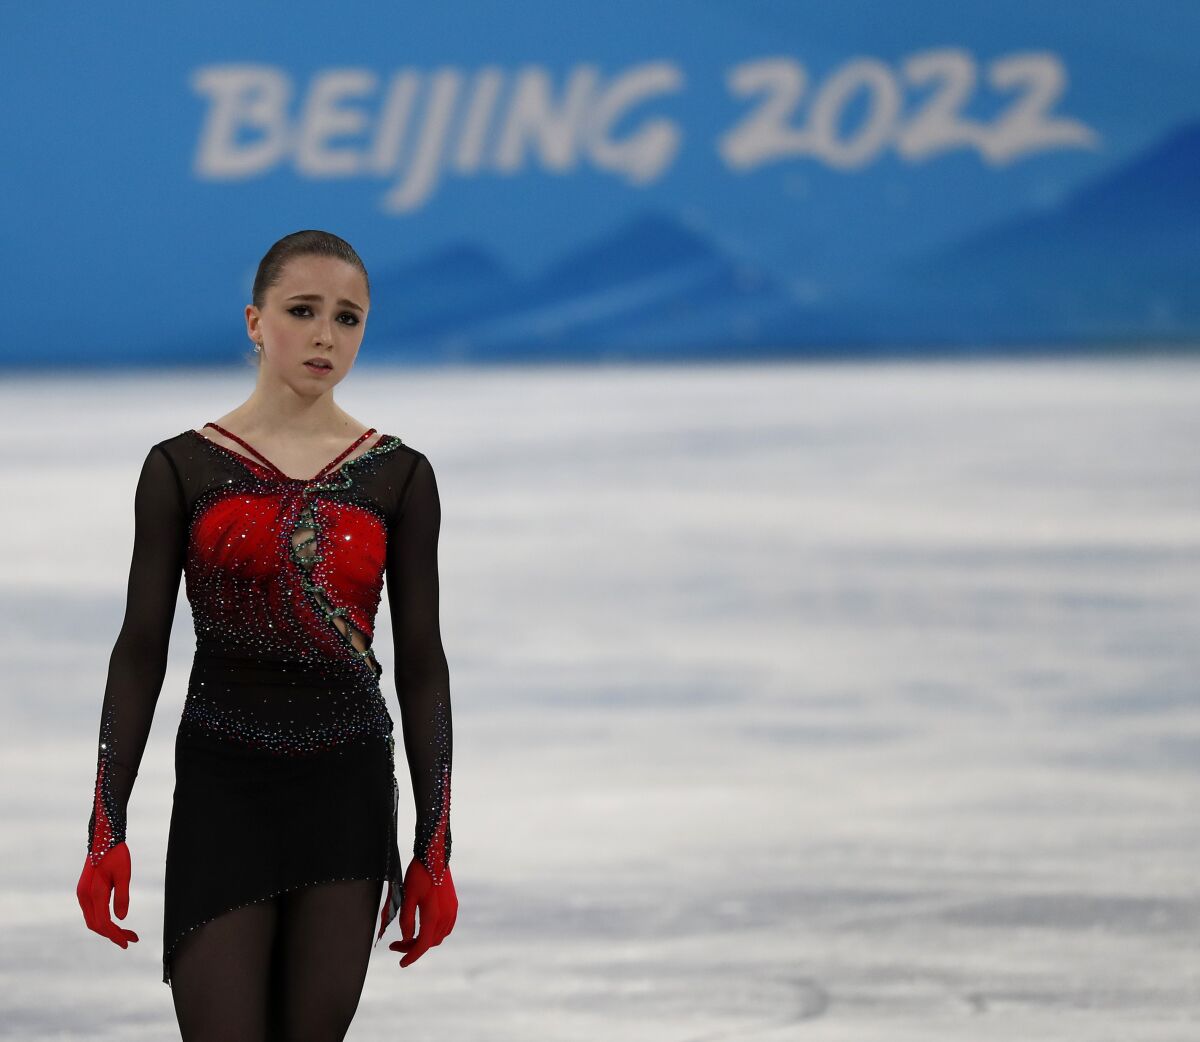 A dejected Kamila Valieva after skating the women's single skating-free skating program